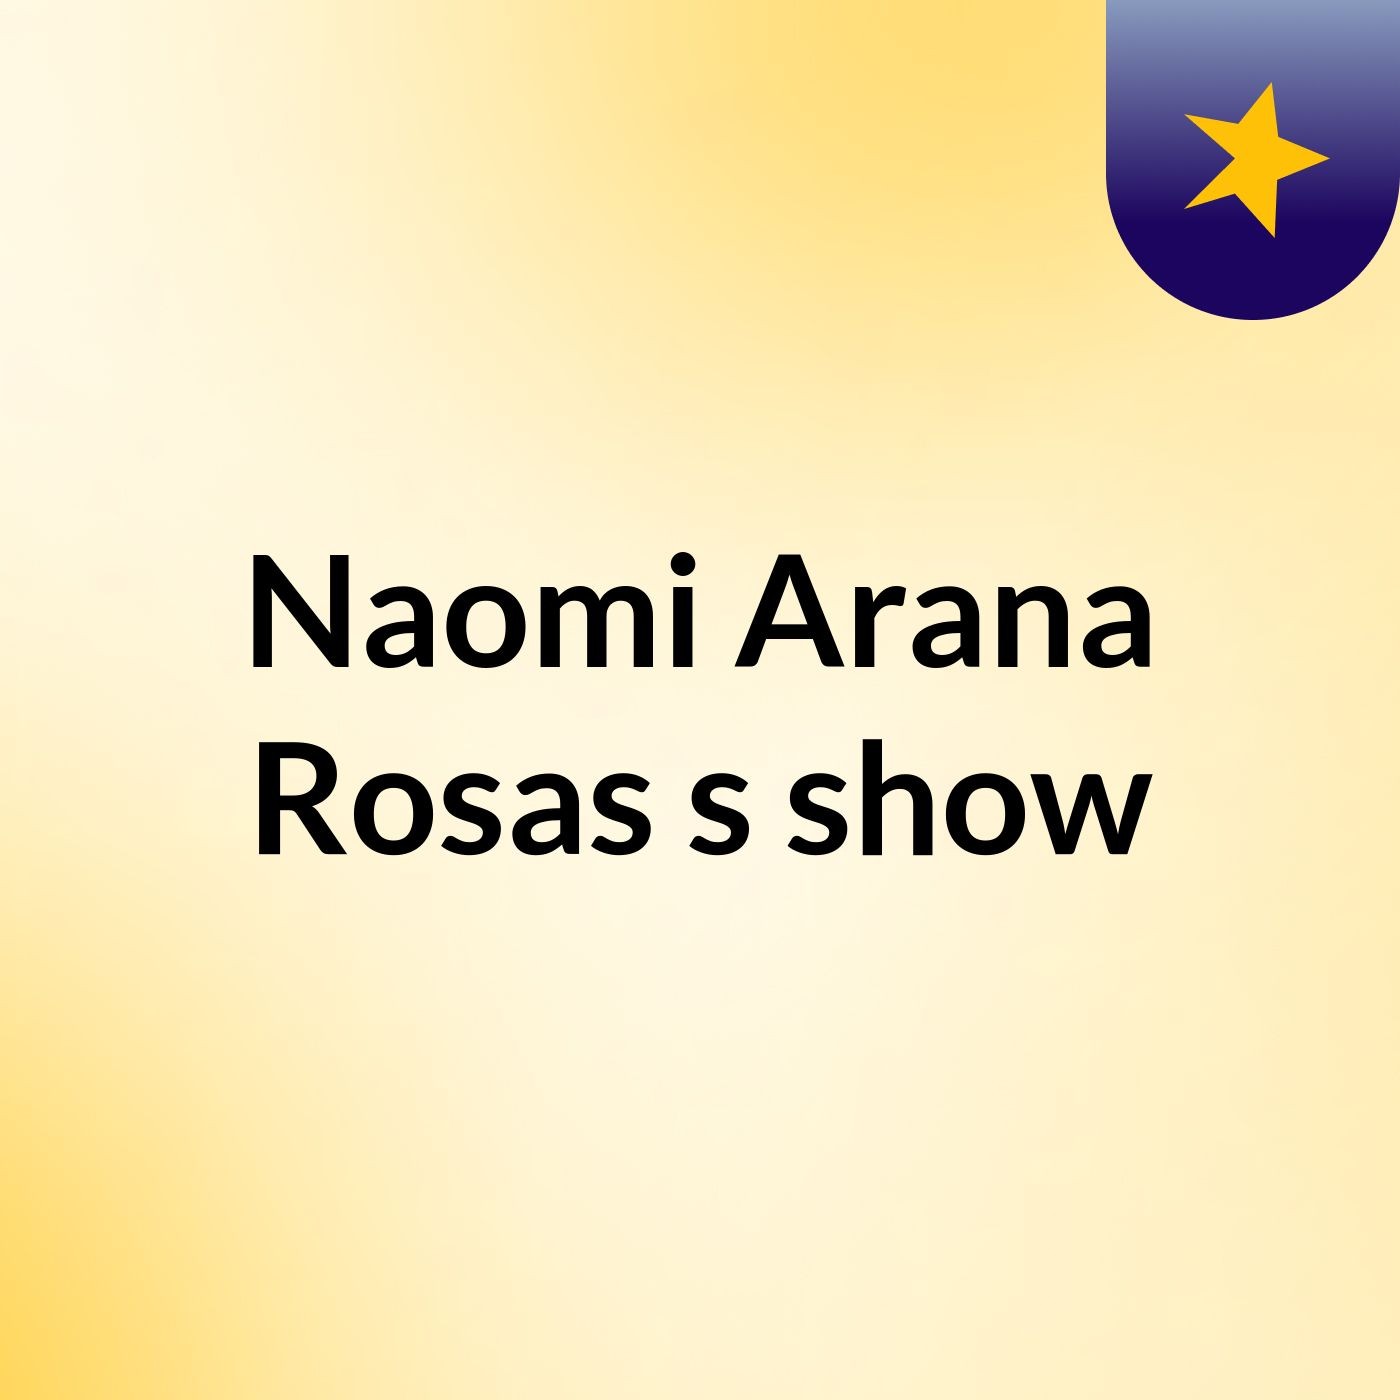 Naomi Arana Rosas's show